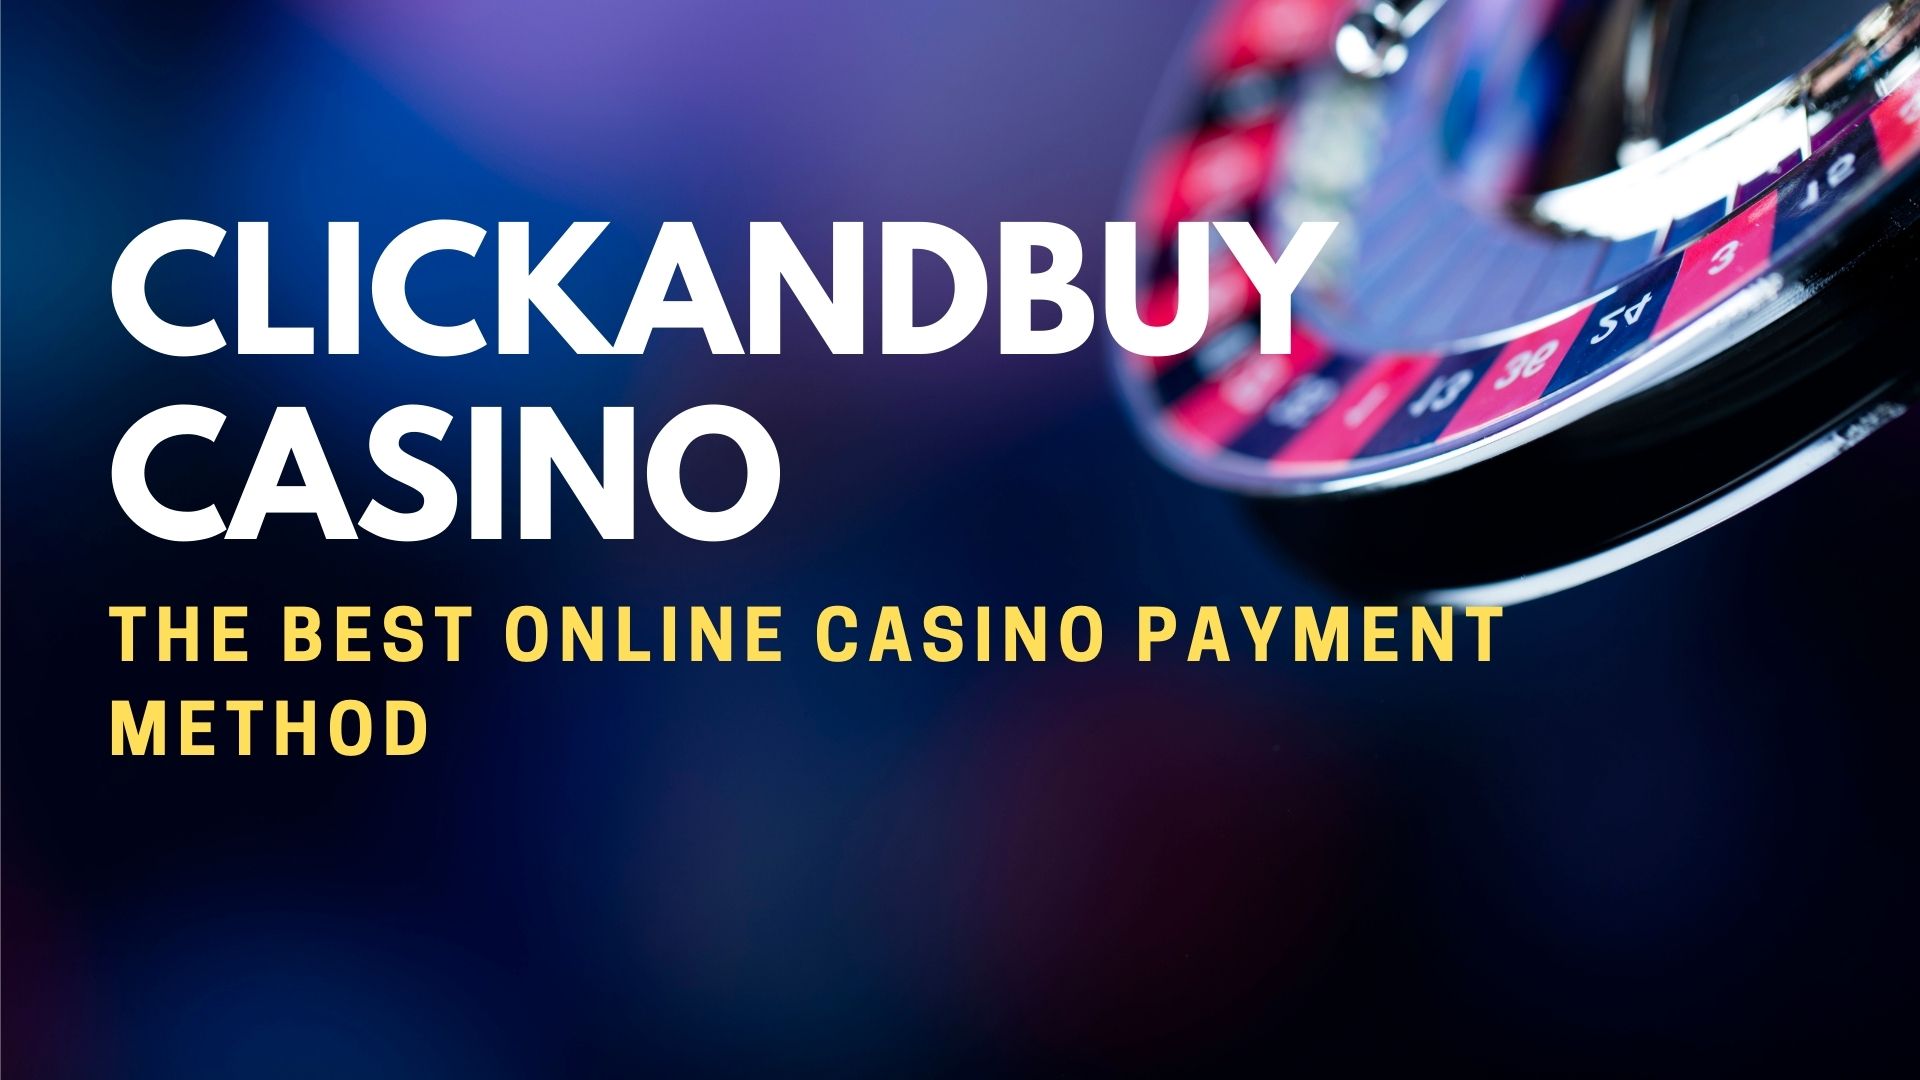 Clickandbuy Casino The Best Online Casino Payment Method